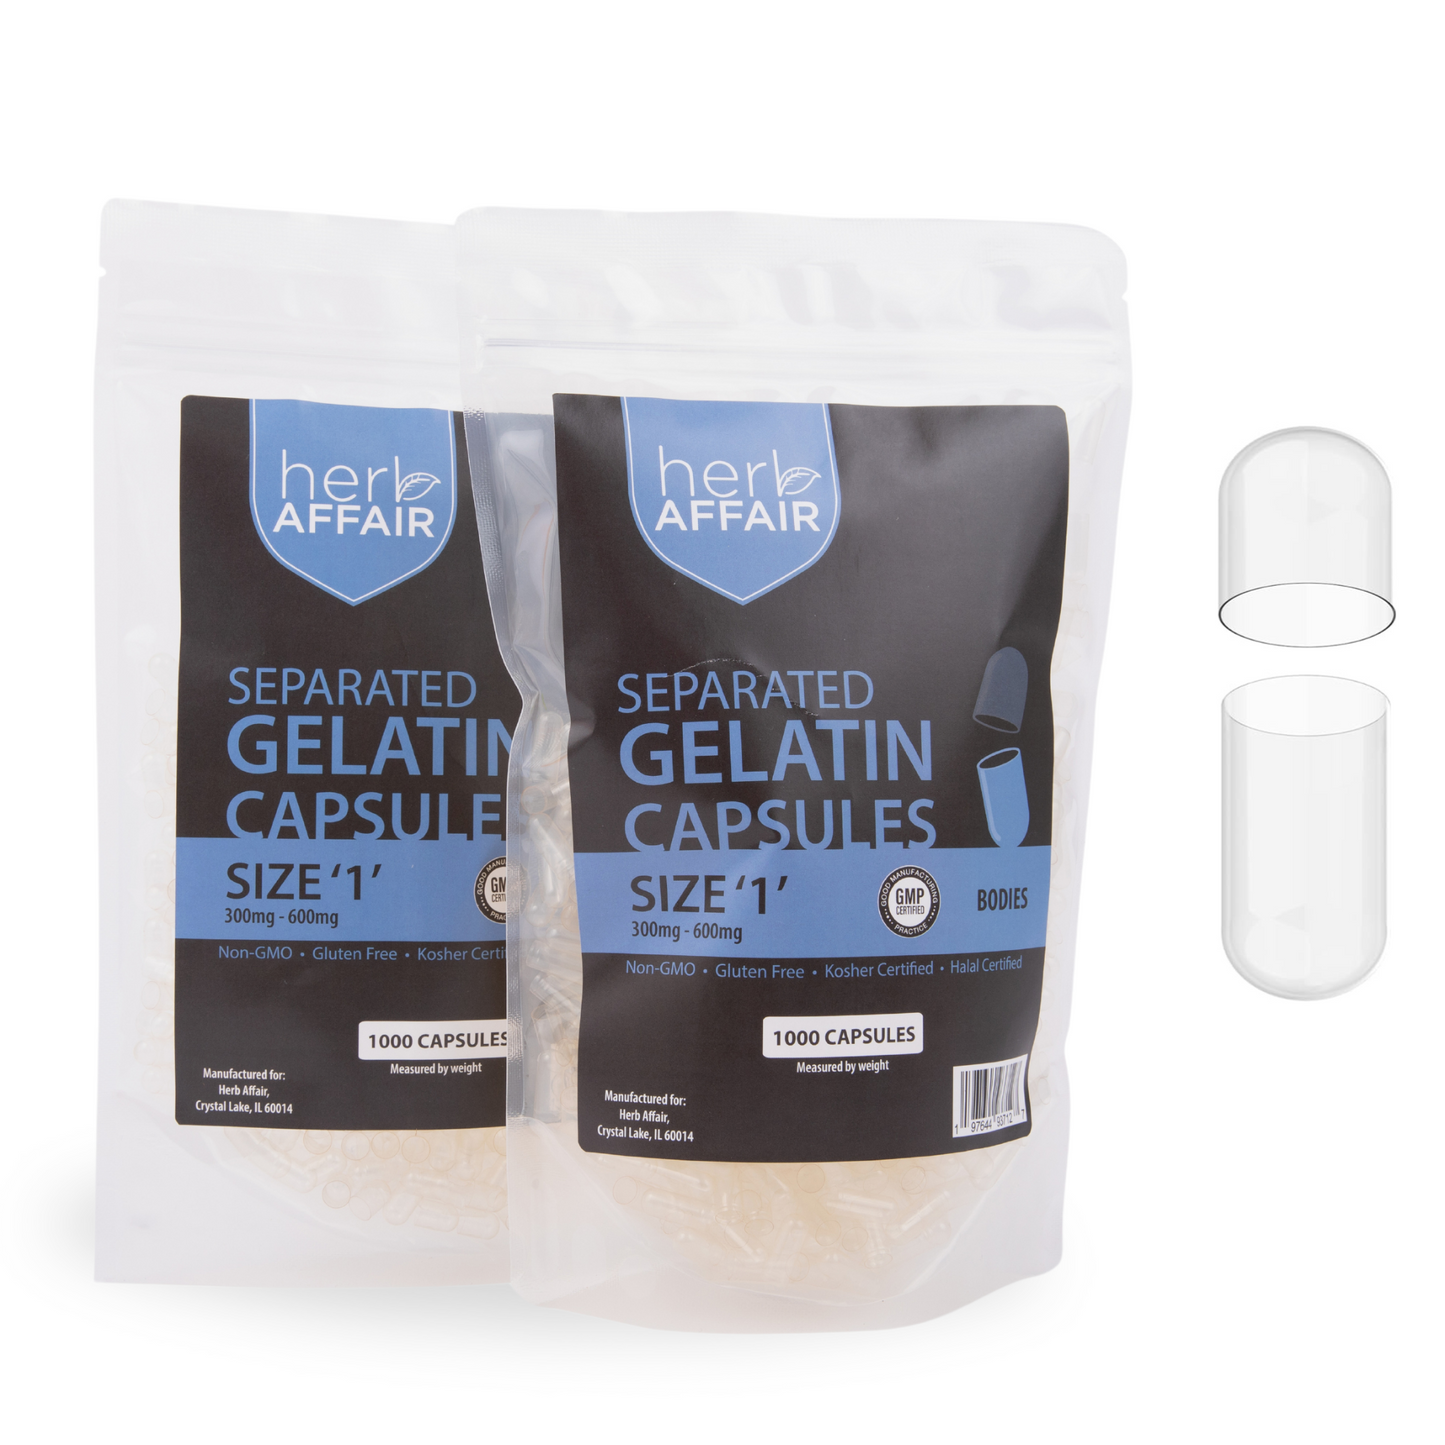 Separated Empty Gelatin Capsules "Size 1" (1000 ct)